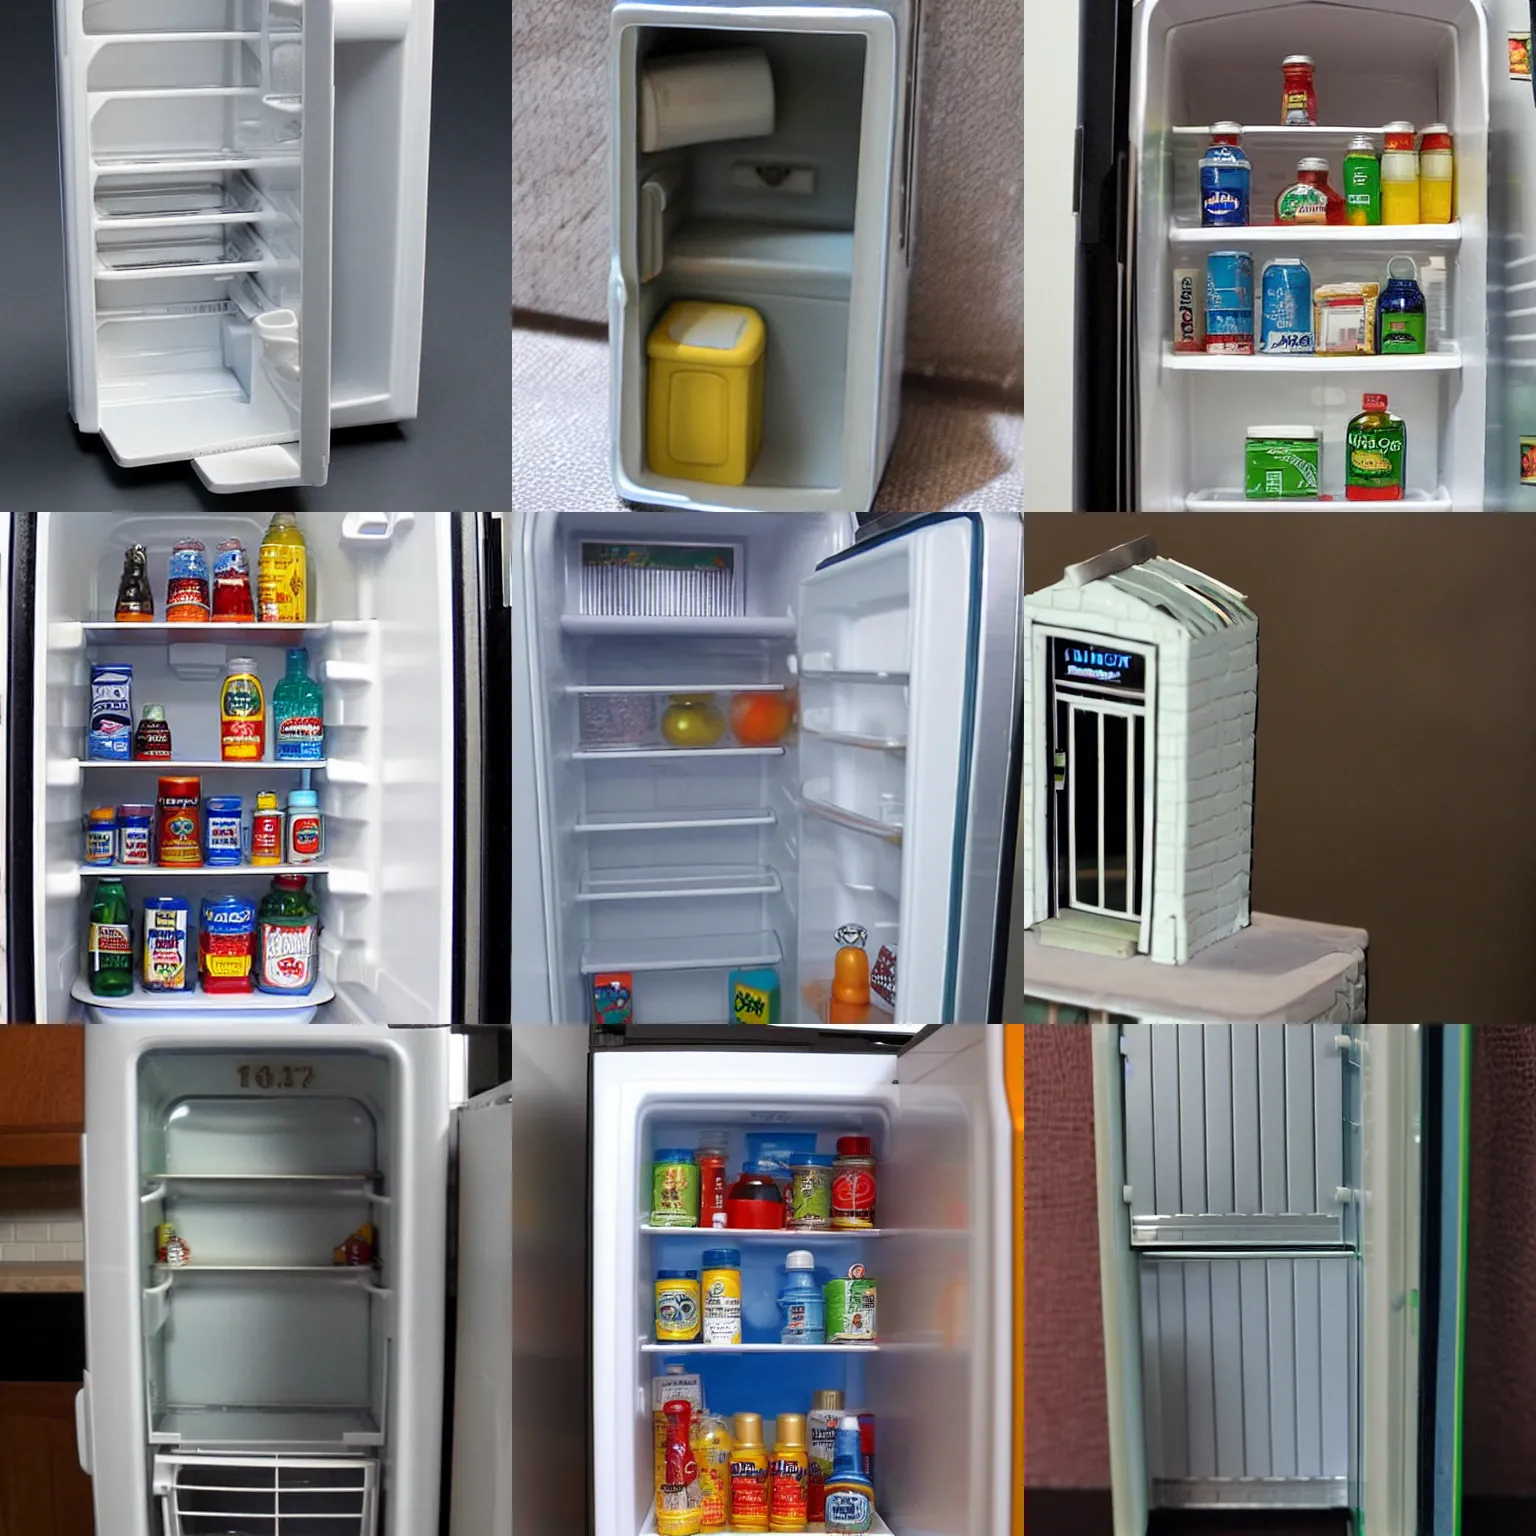 Prompt: a miniature building inside a refrigerator